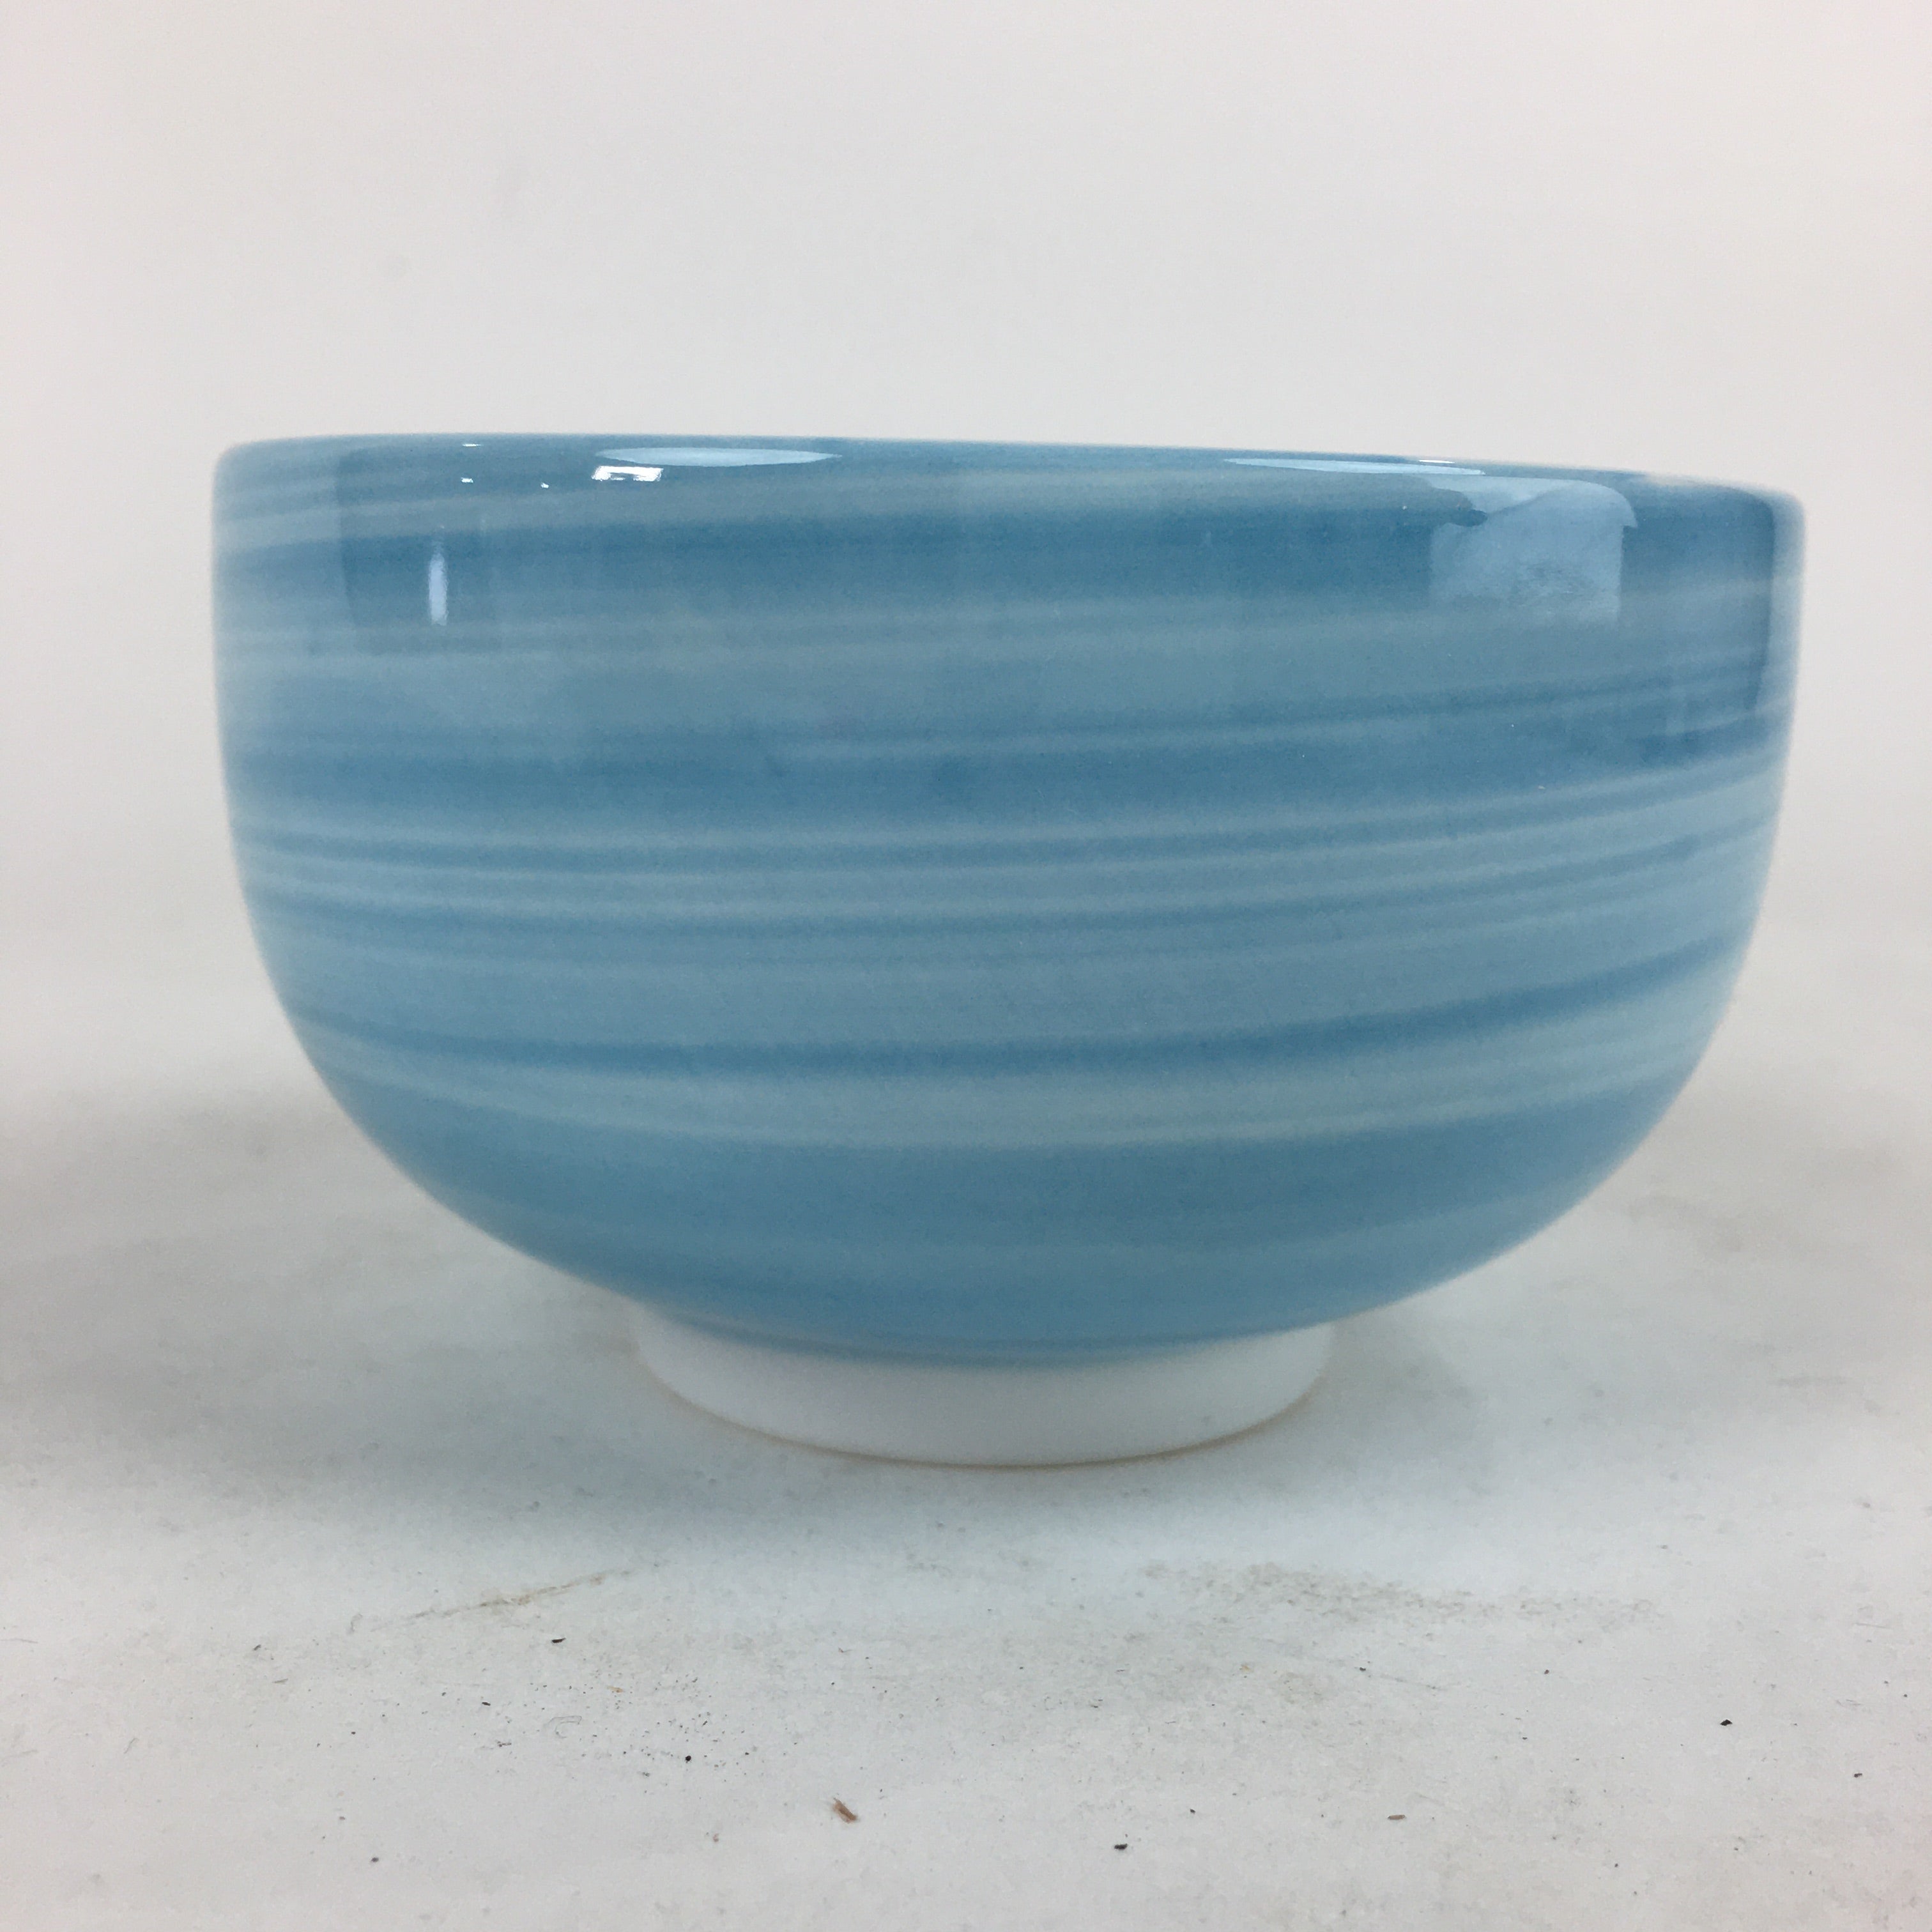 Japanese Porcelain Rice Bowl Vtg Chawan Boxed Pottery Light Blue PX605